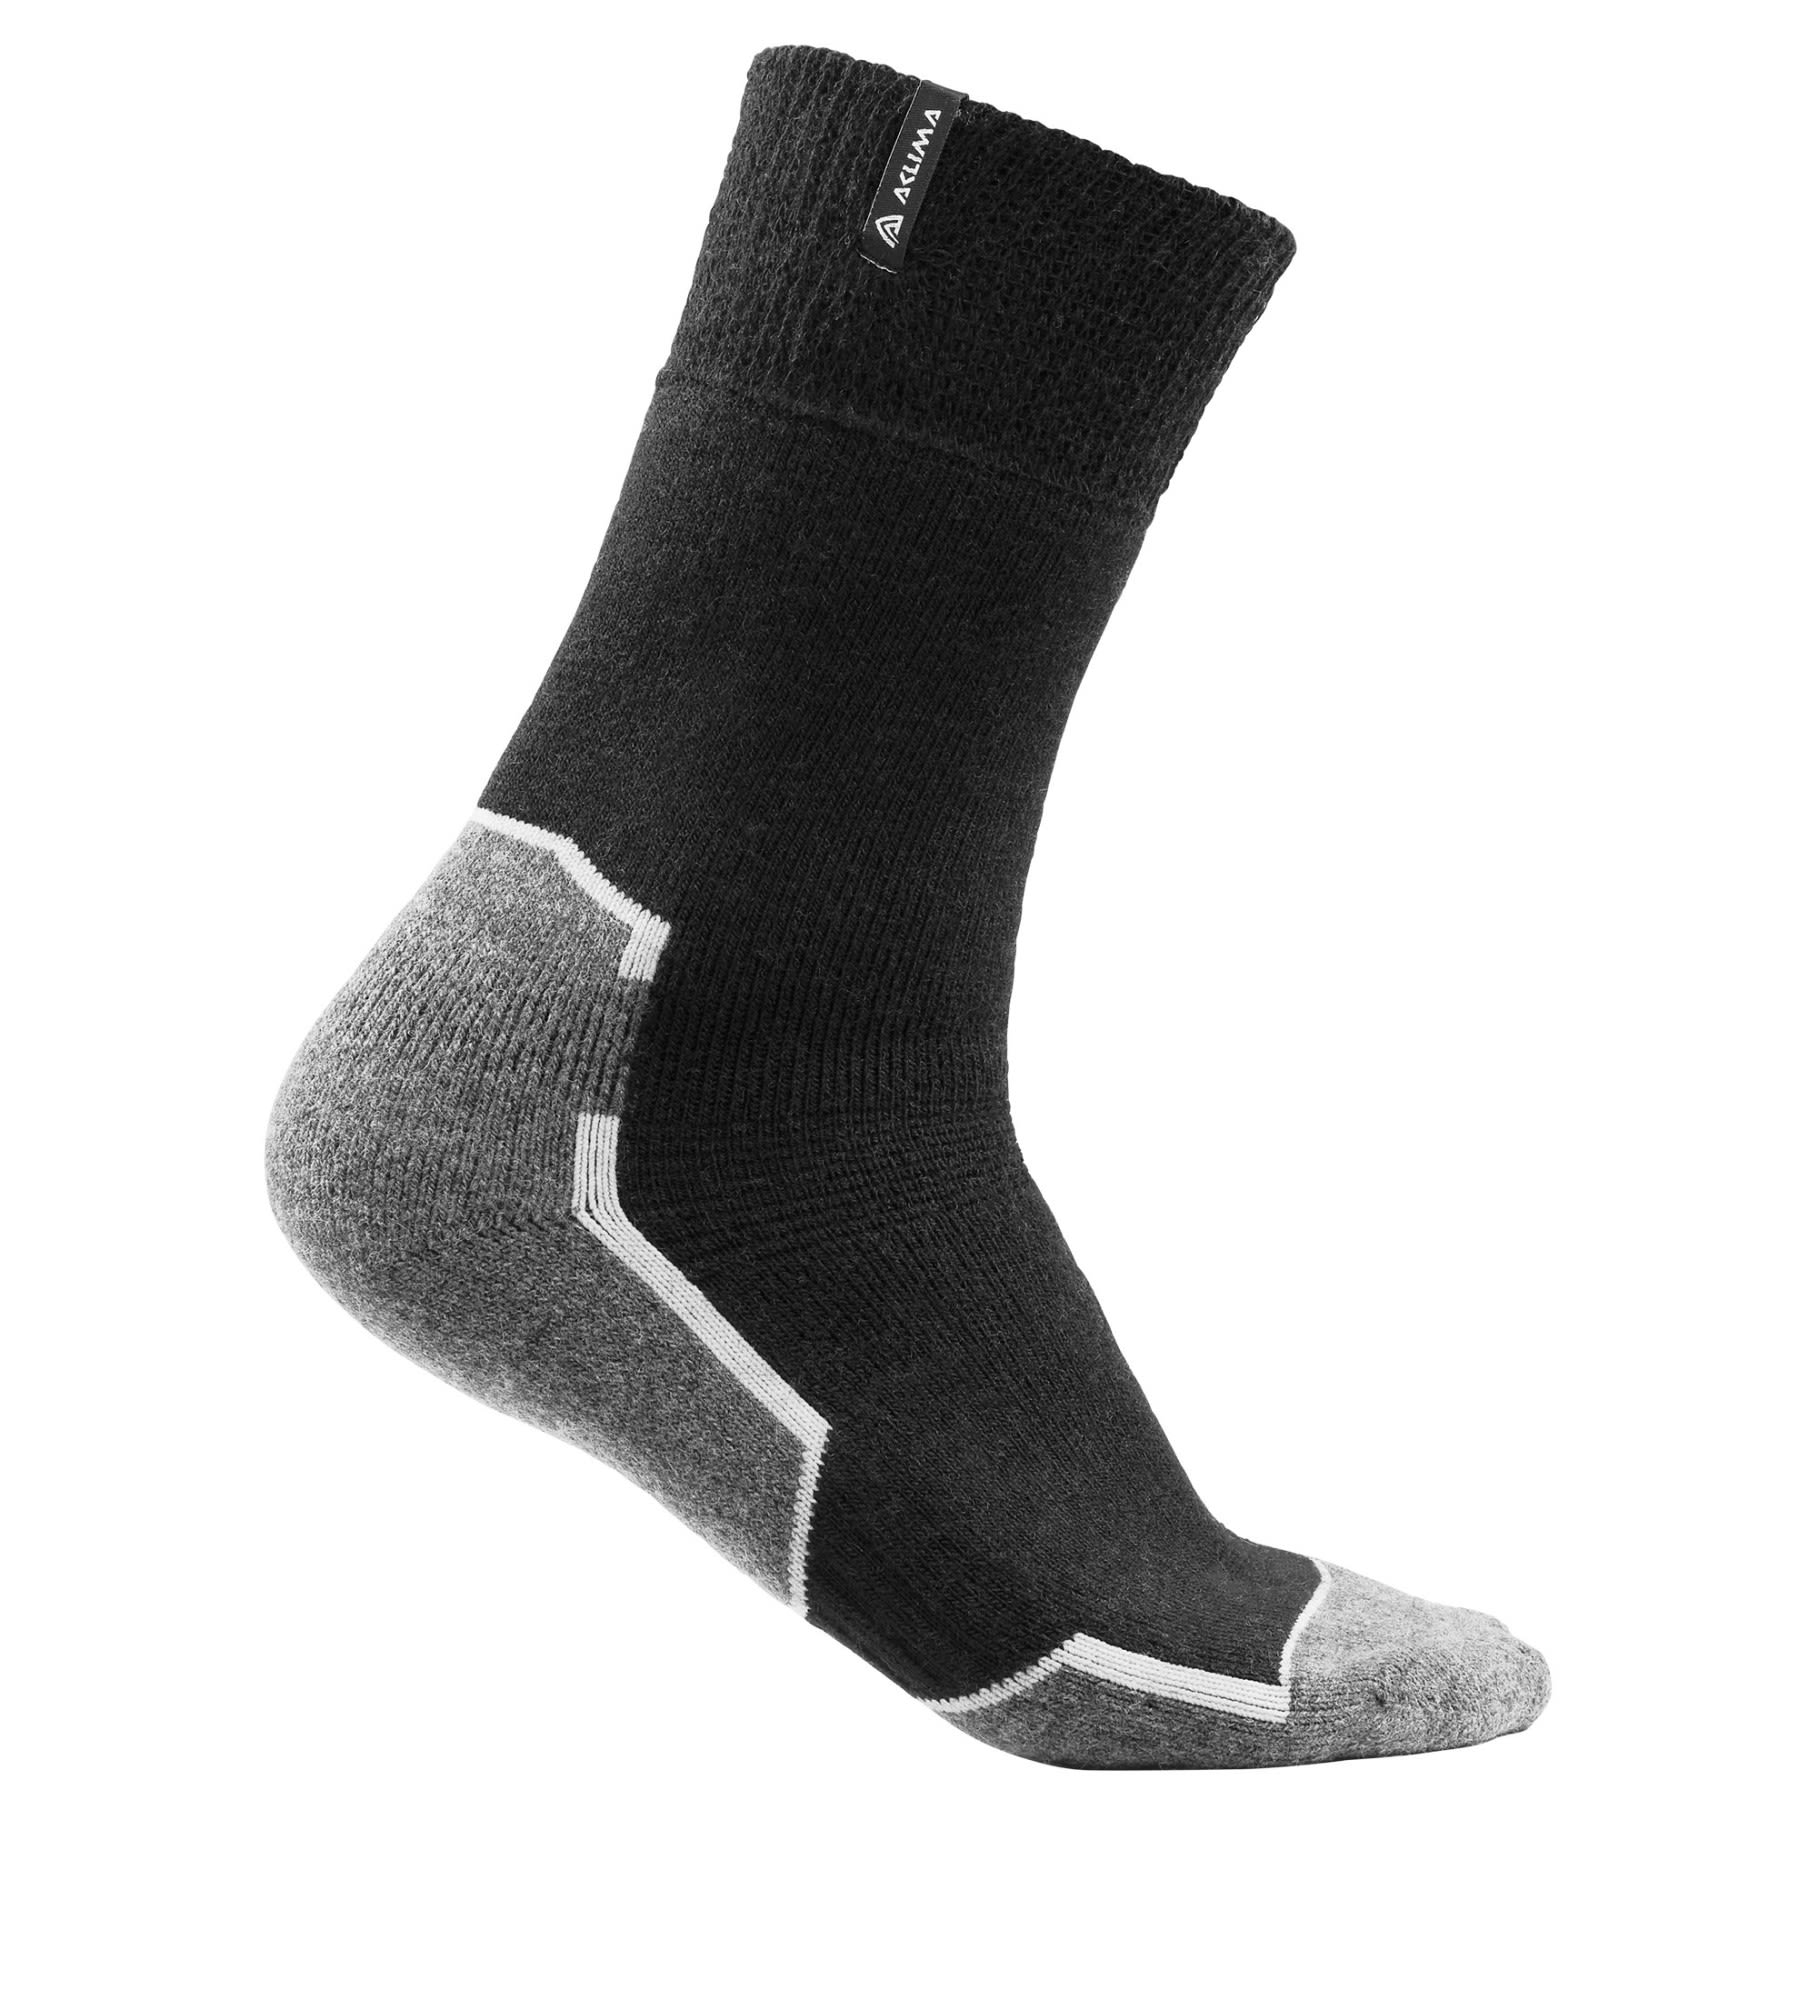 Aclima Warmwool Socks Schwarz- Merino Wander- und Trekkingsocken- Grsse 36 - 39 - Farbe Jet Black unter Aclima